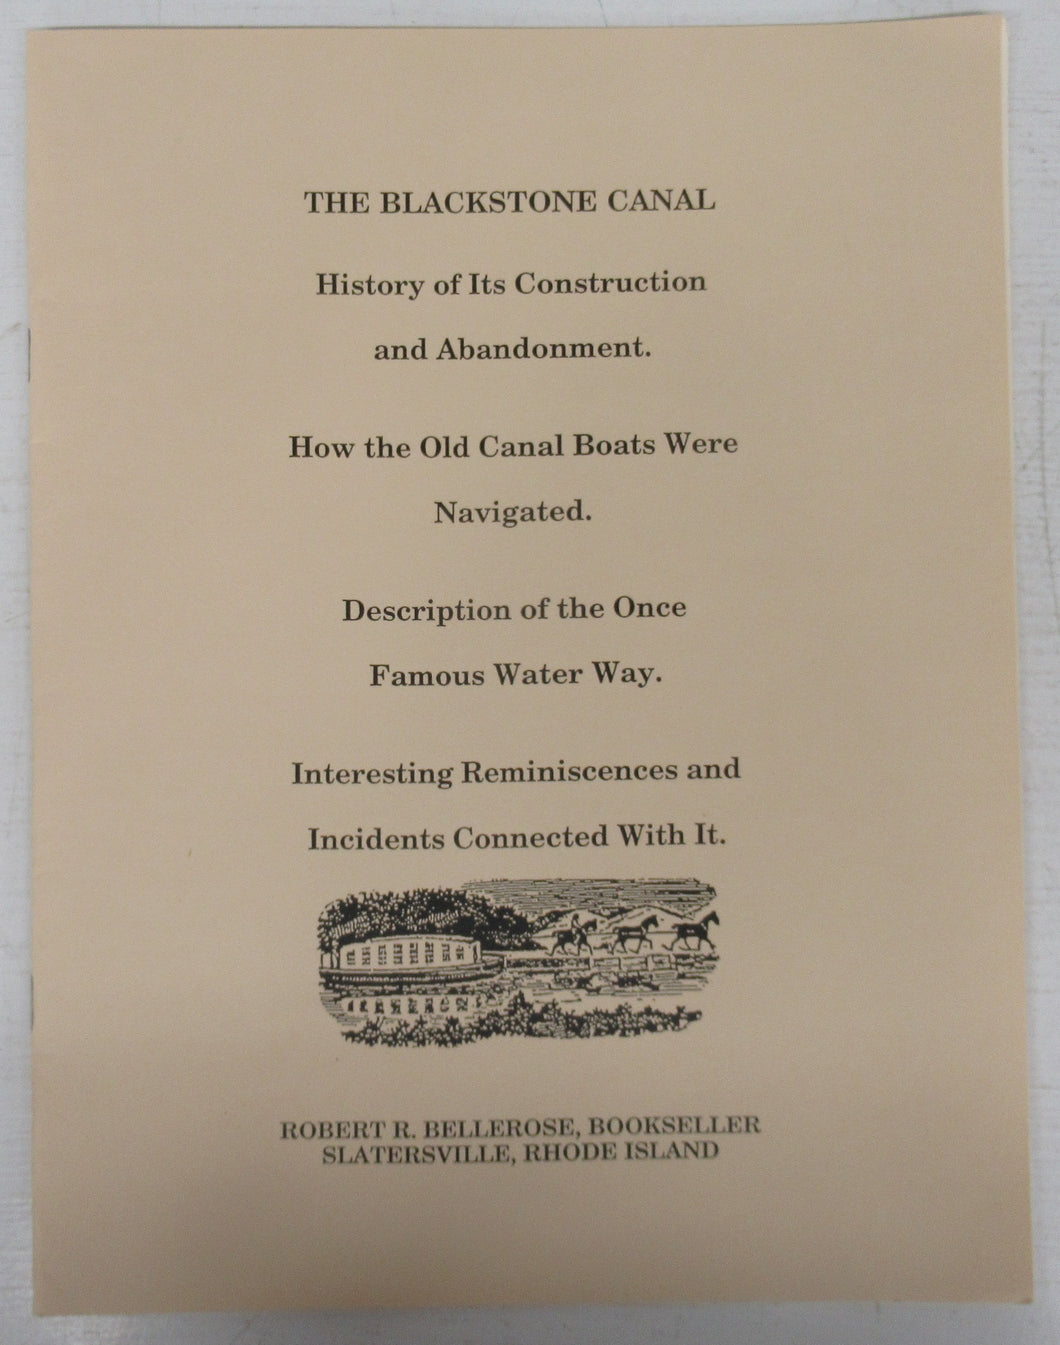 The Blackstone Canal